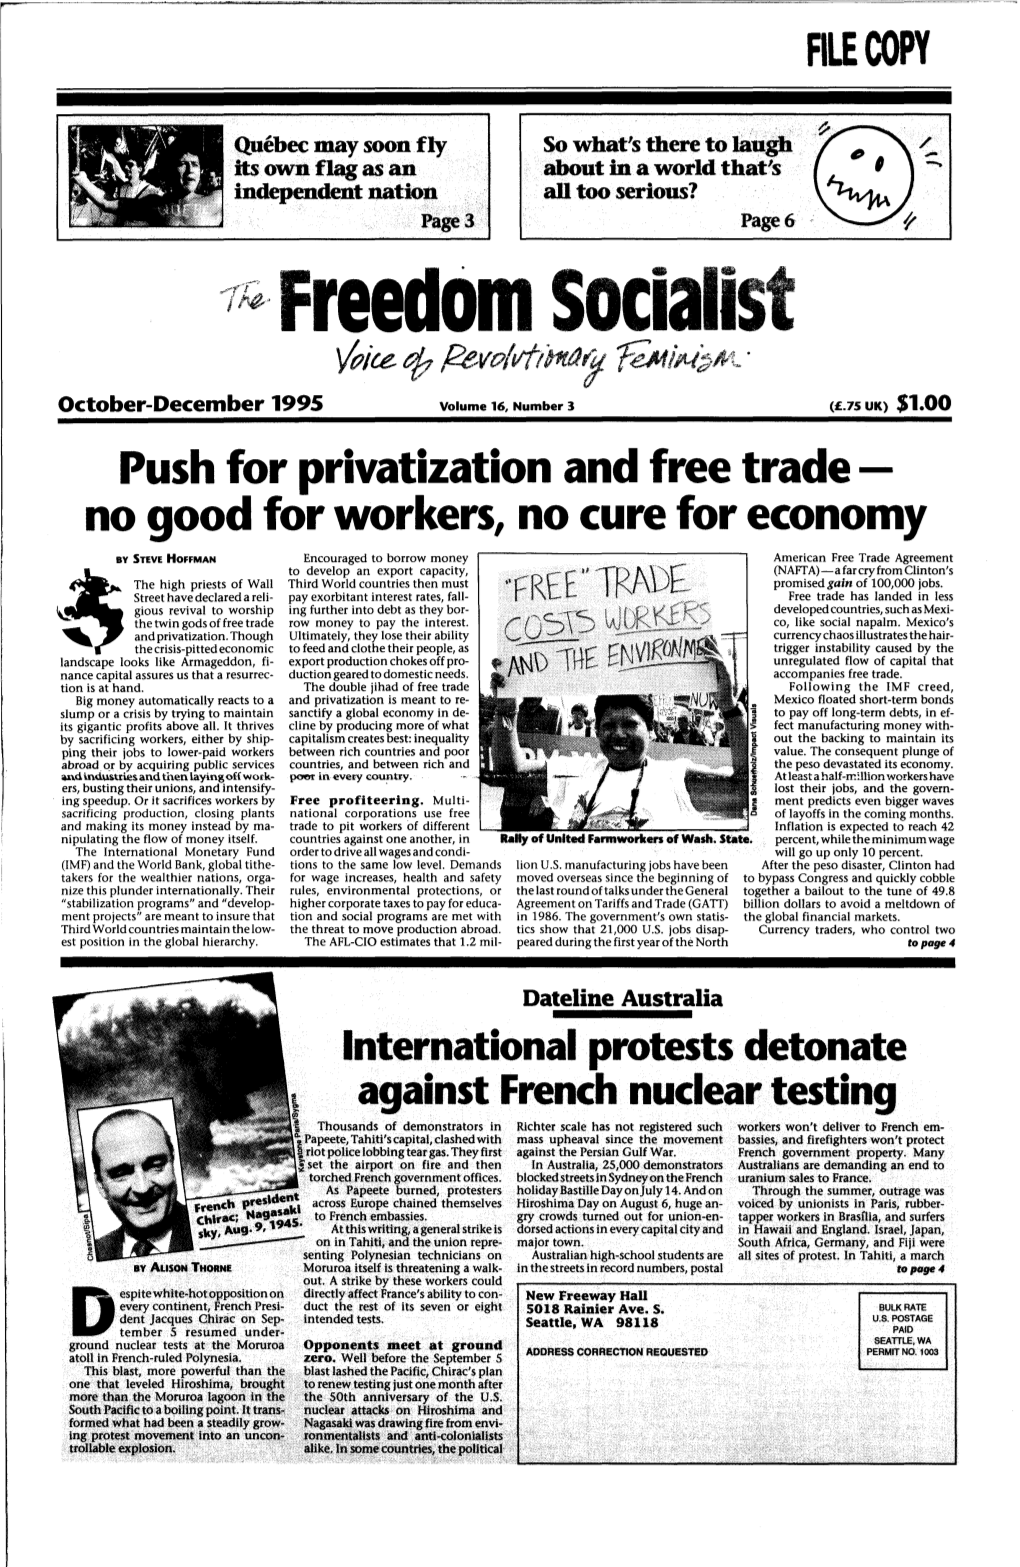 Freedom Socialist Party, New Freeway Hall, 5018 Rainier Avenue South, Seattle, WA 98118